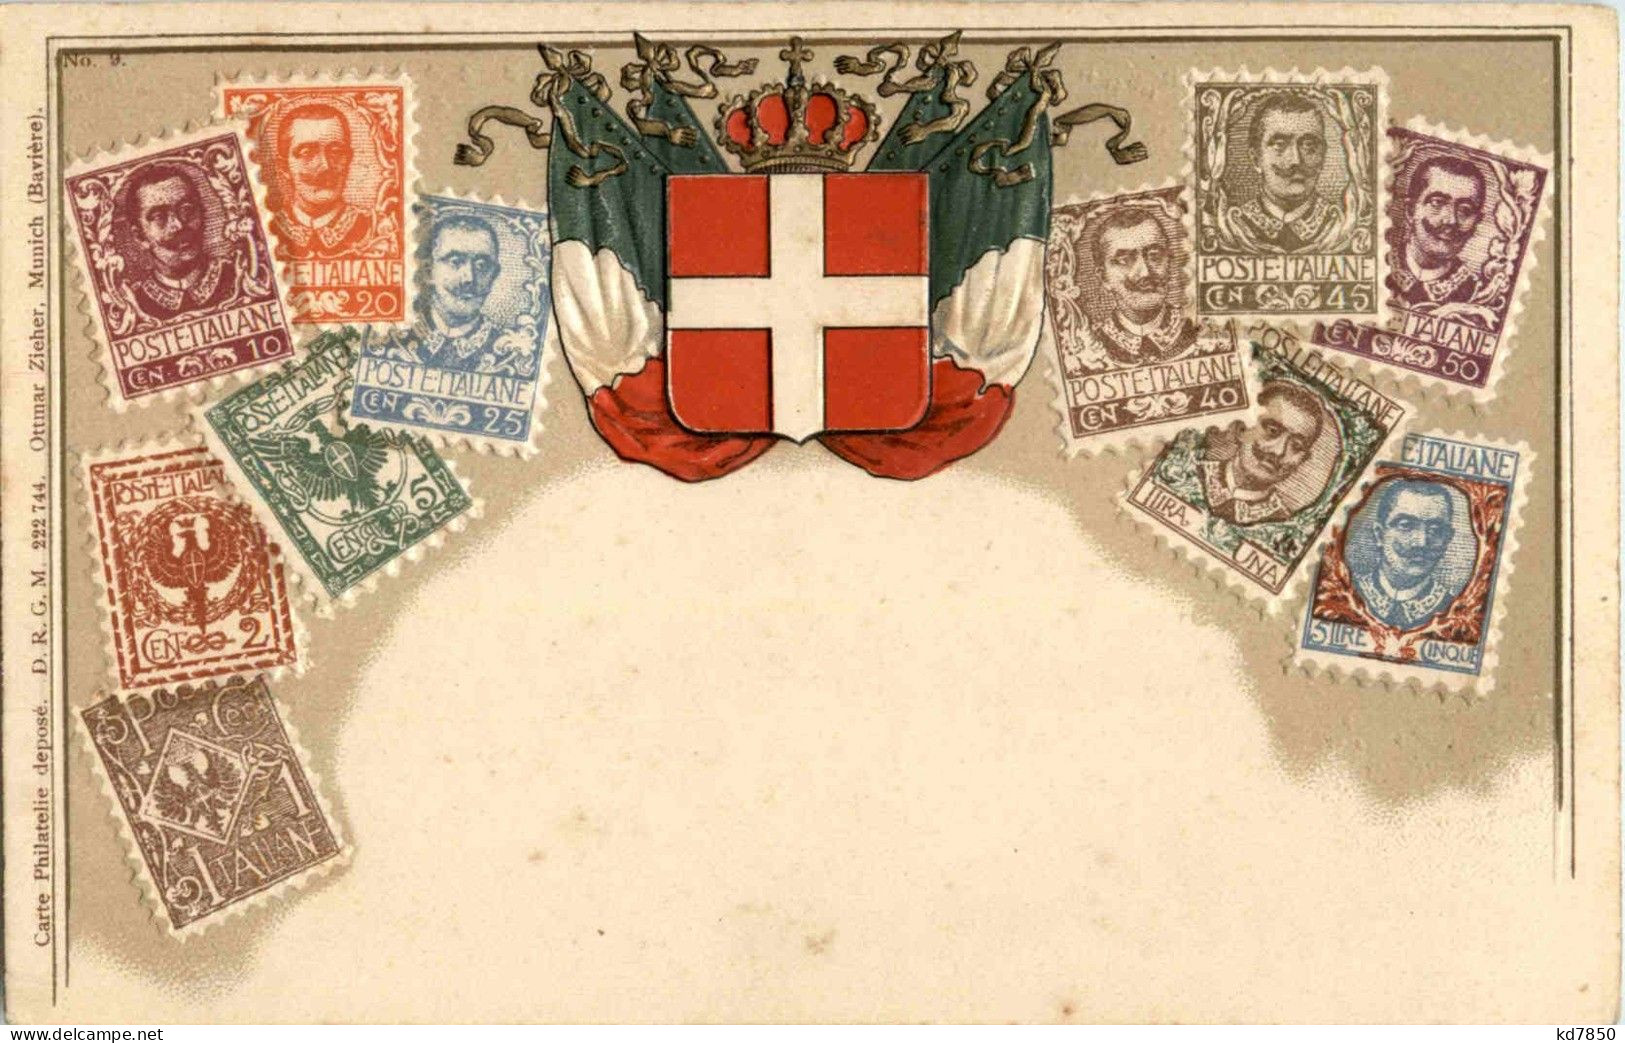 Italy - Briefmarken - Stamps - Prägekarte - Francobolli (rappresentazioni)